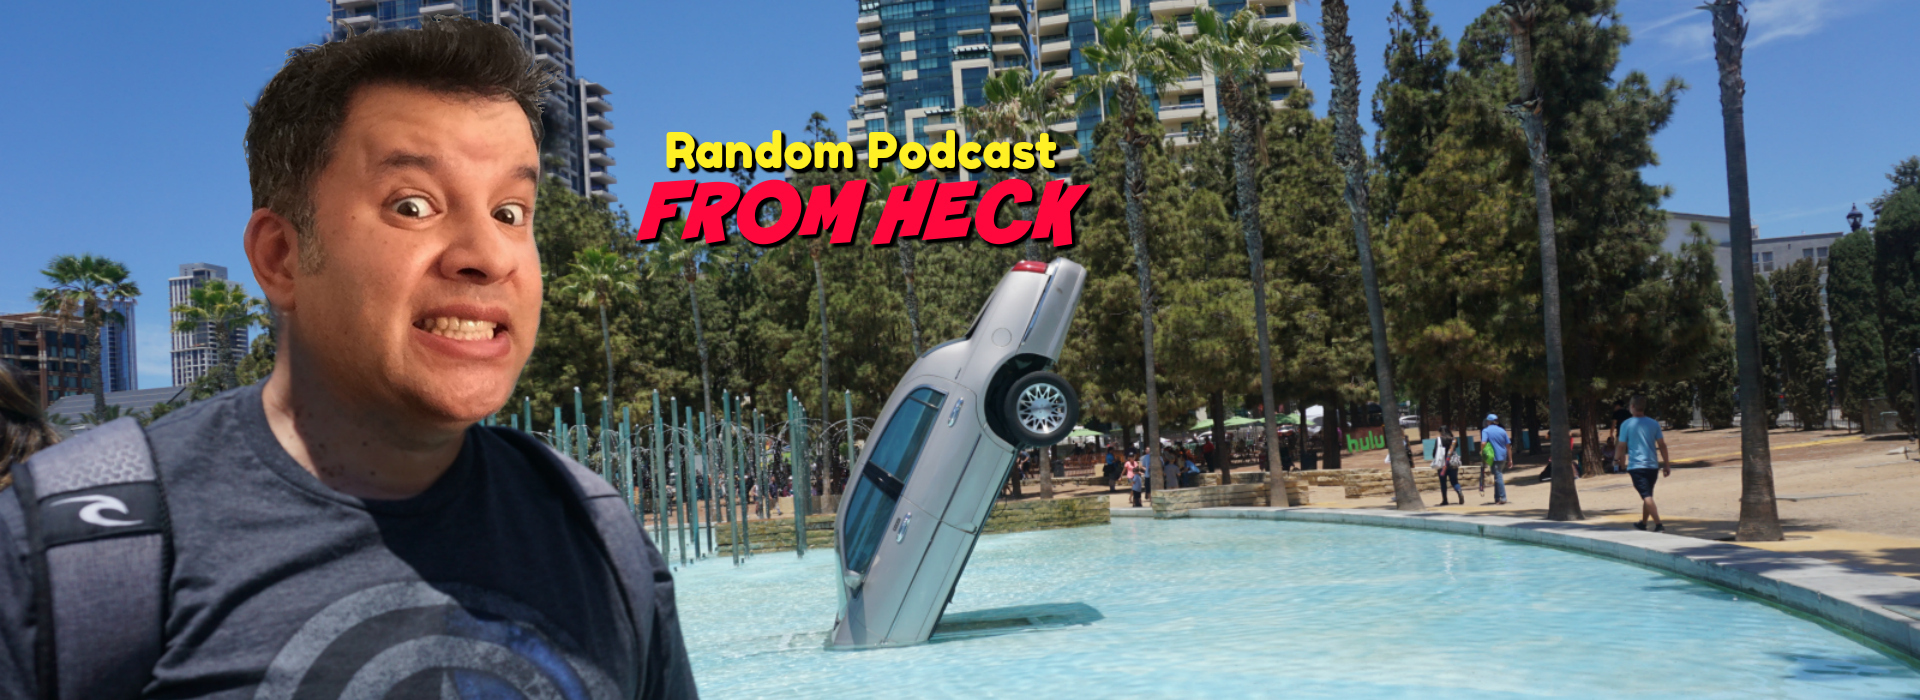 Random Podcast From Heck